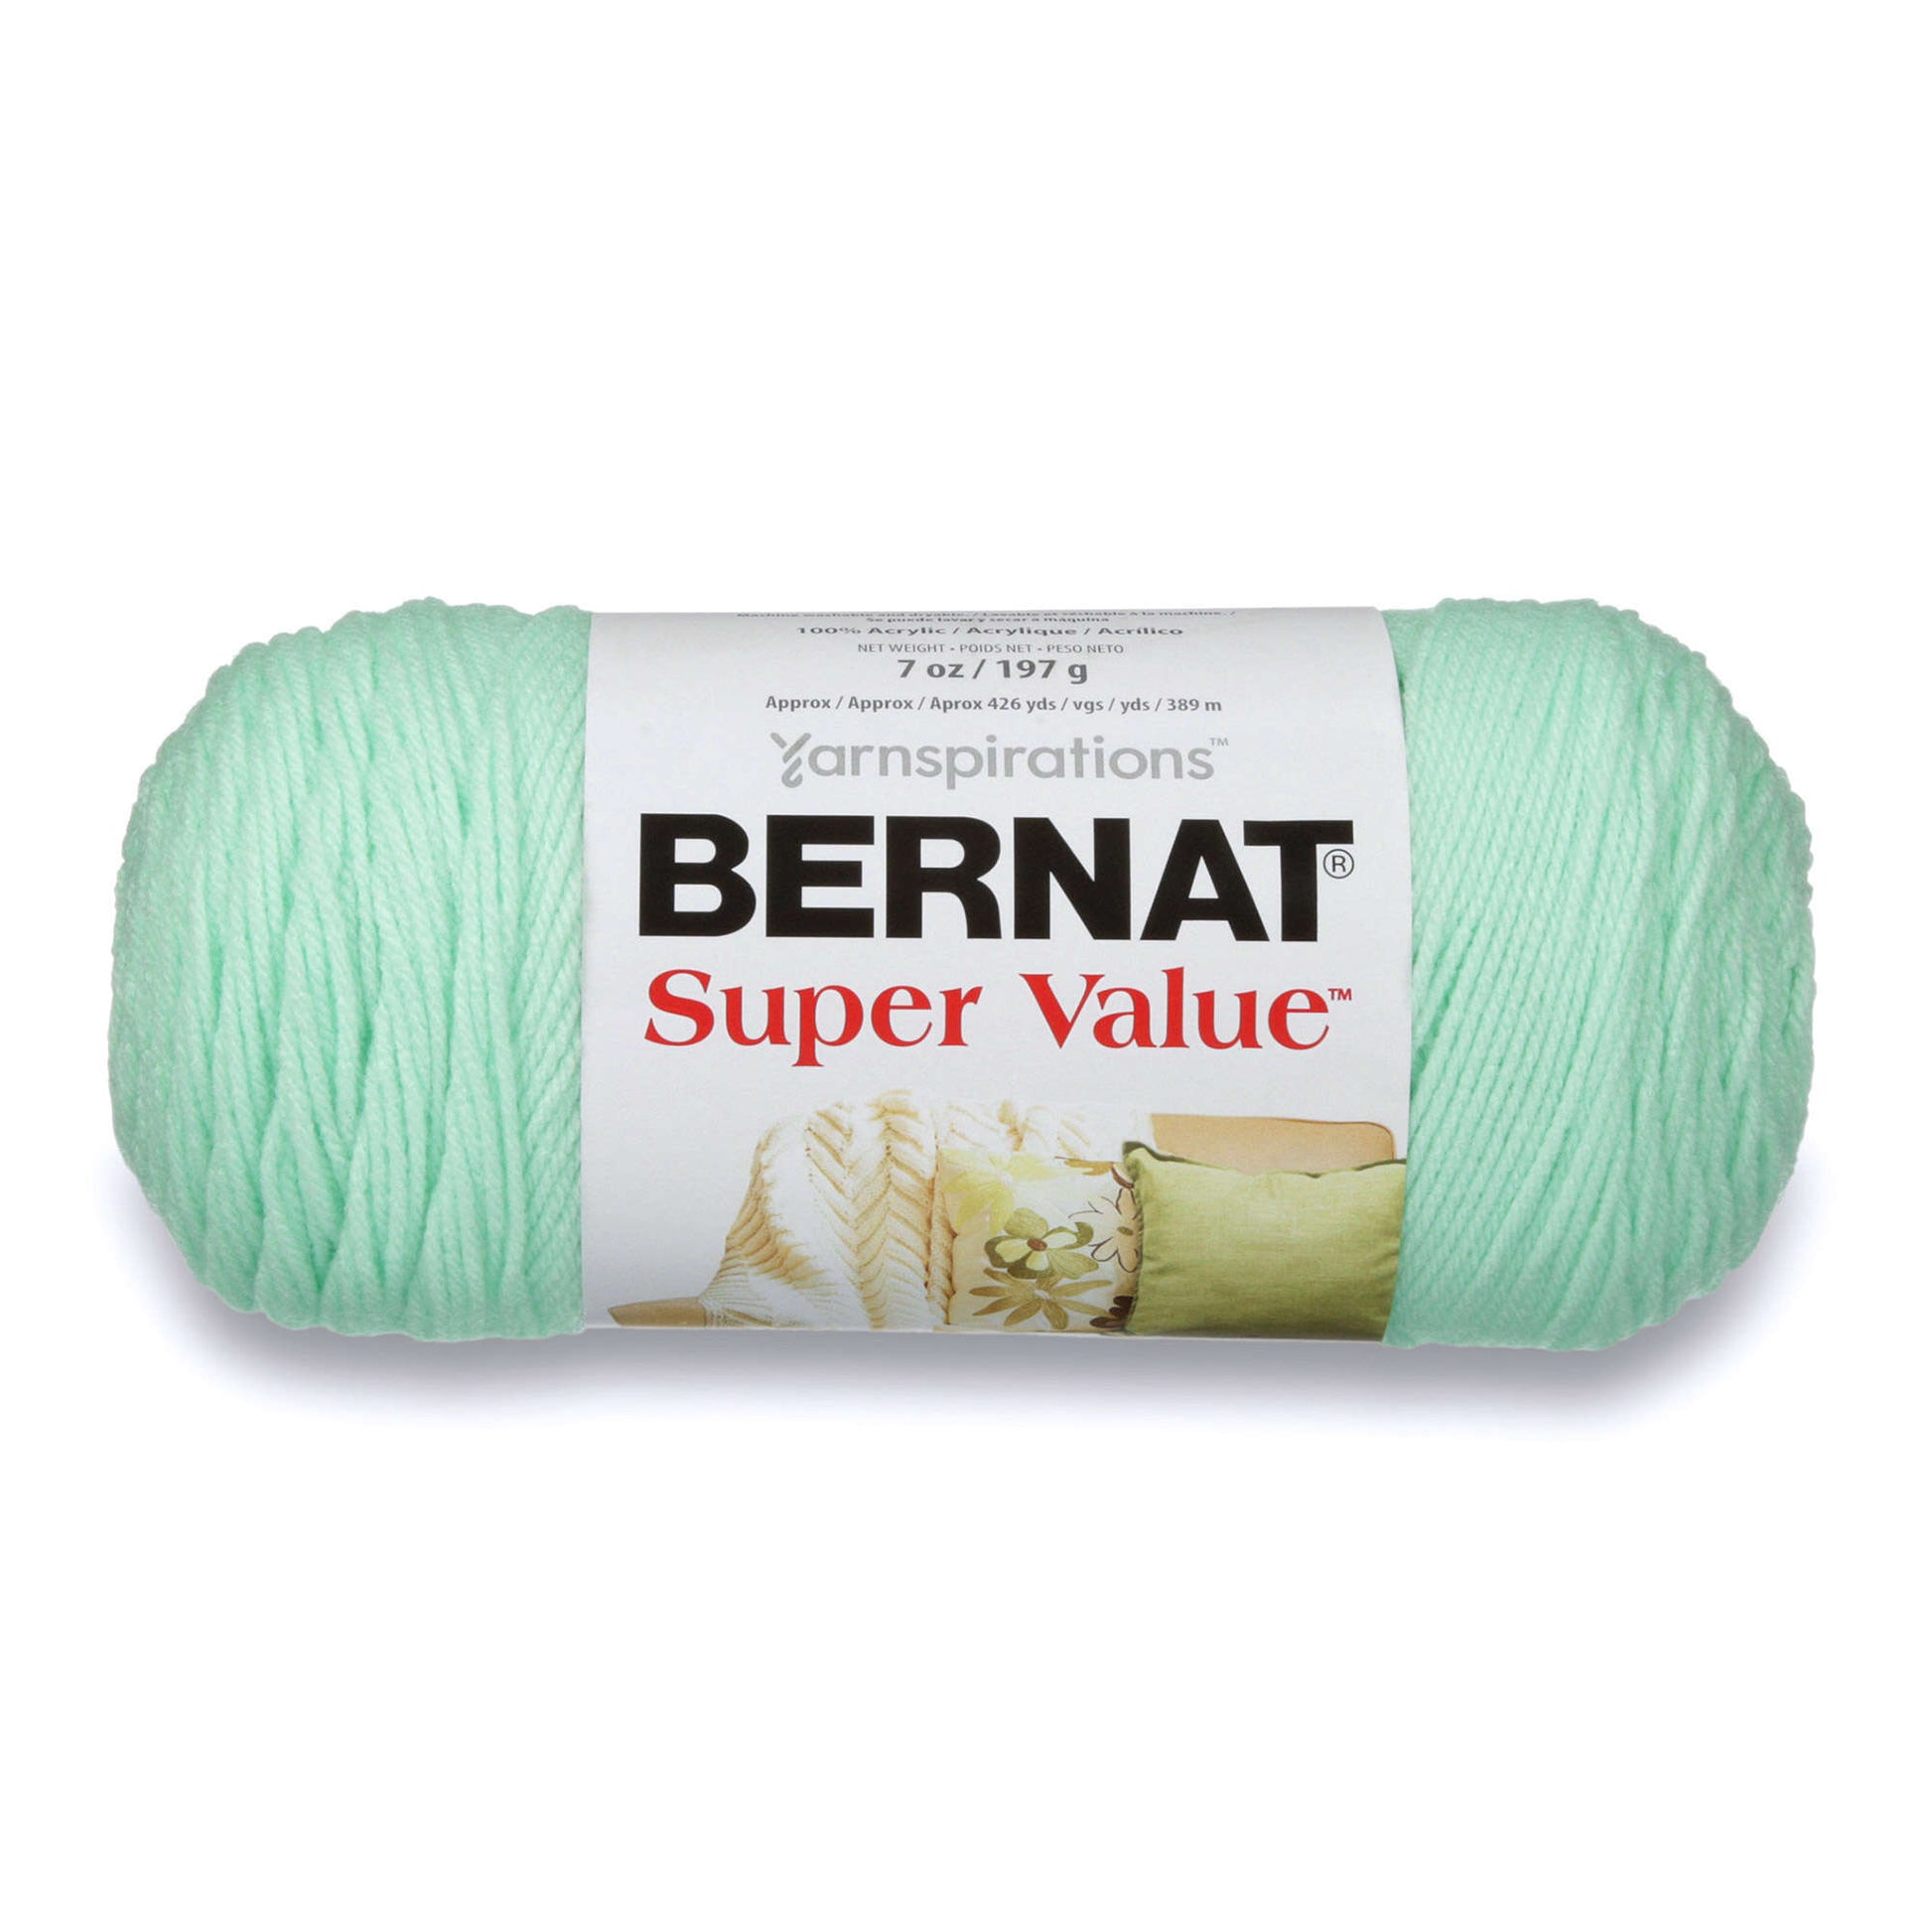 Bernat Super Value Yarn - Redwood Heather 1 ct